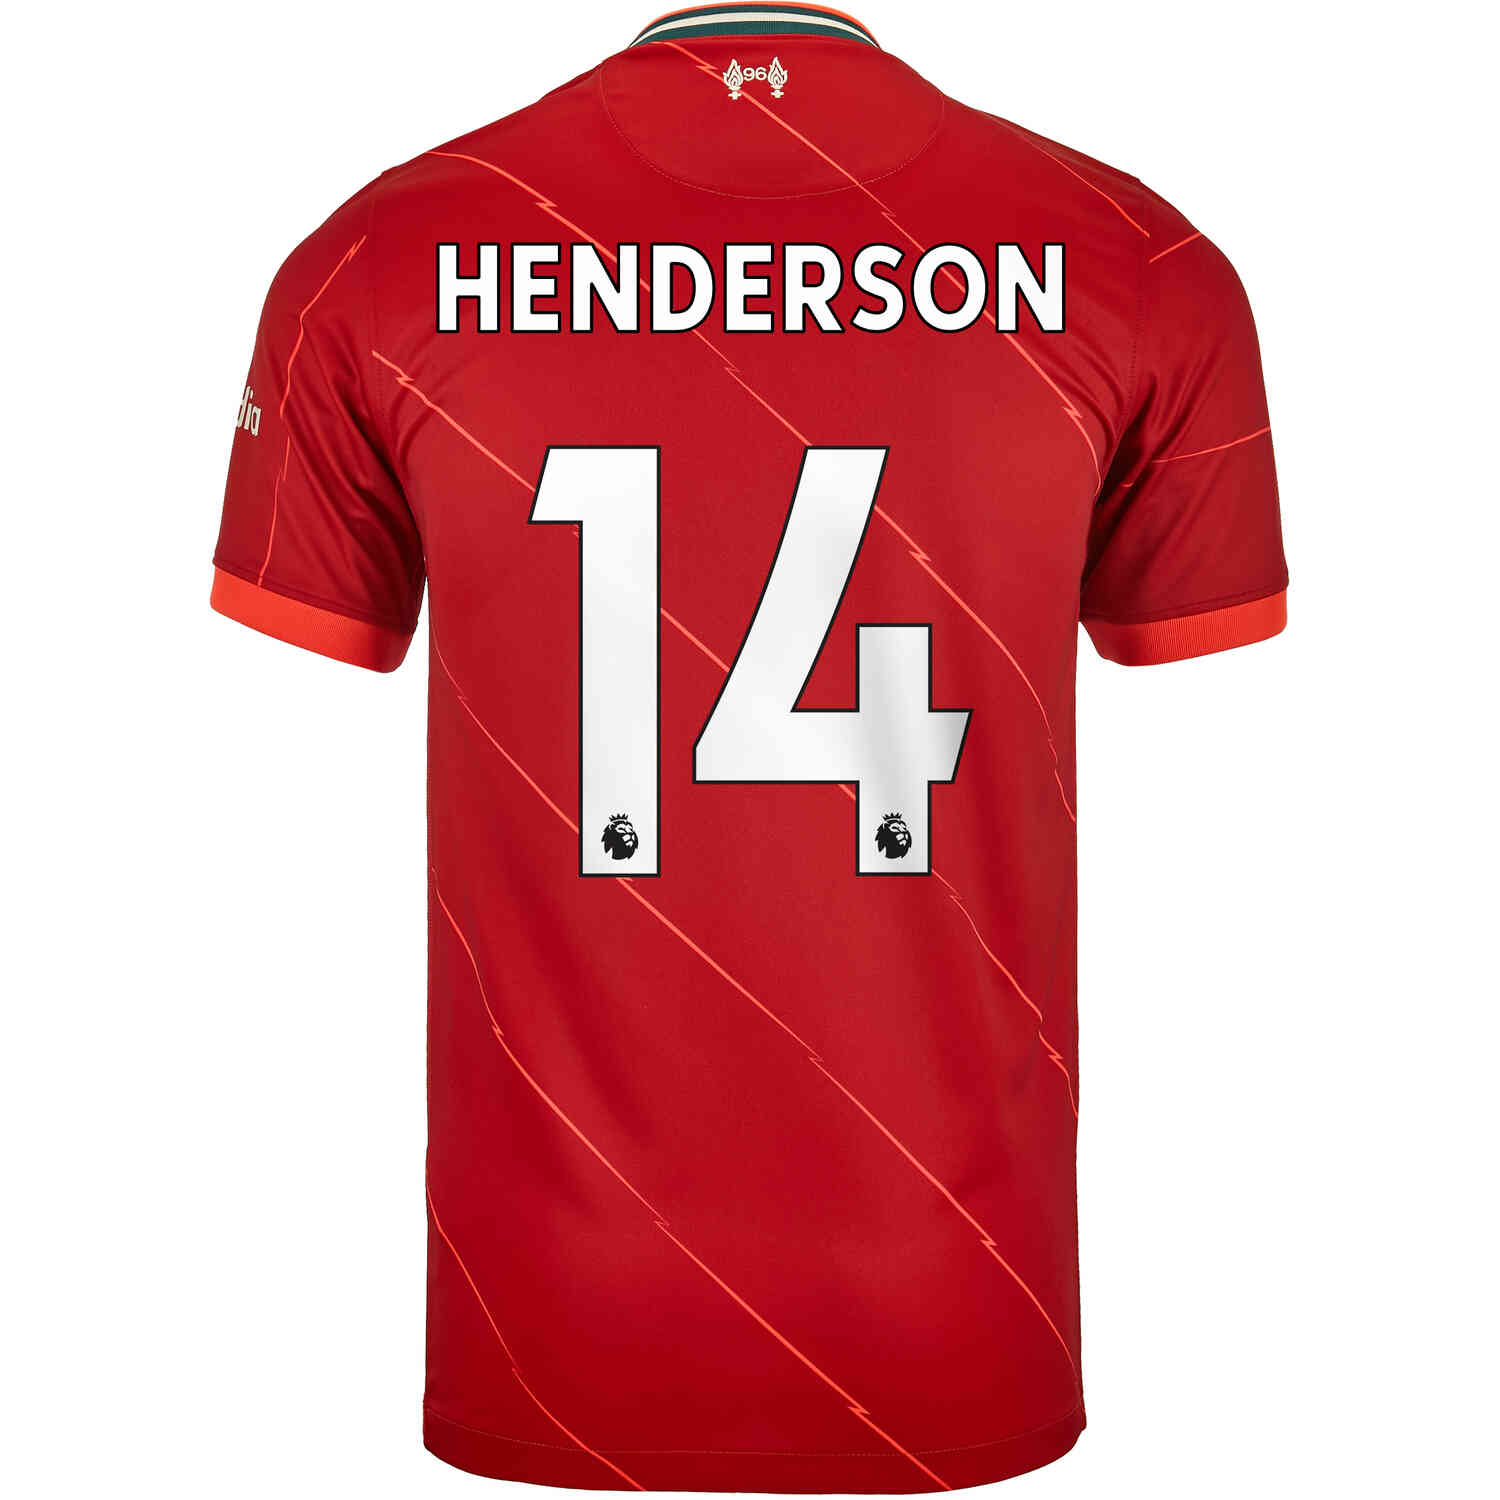 2021/22 Nike Jordan Henderson Liverpool Home Jersey